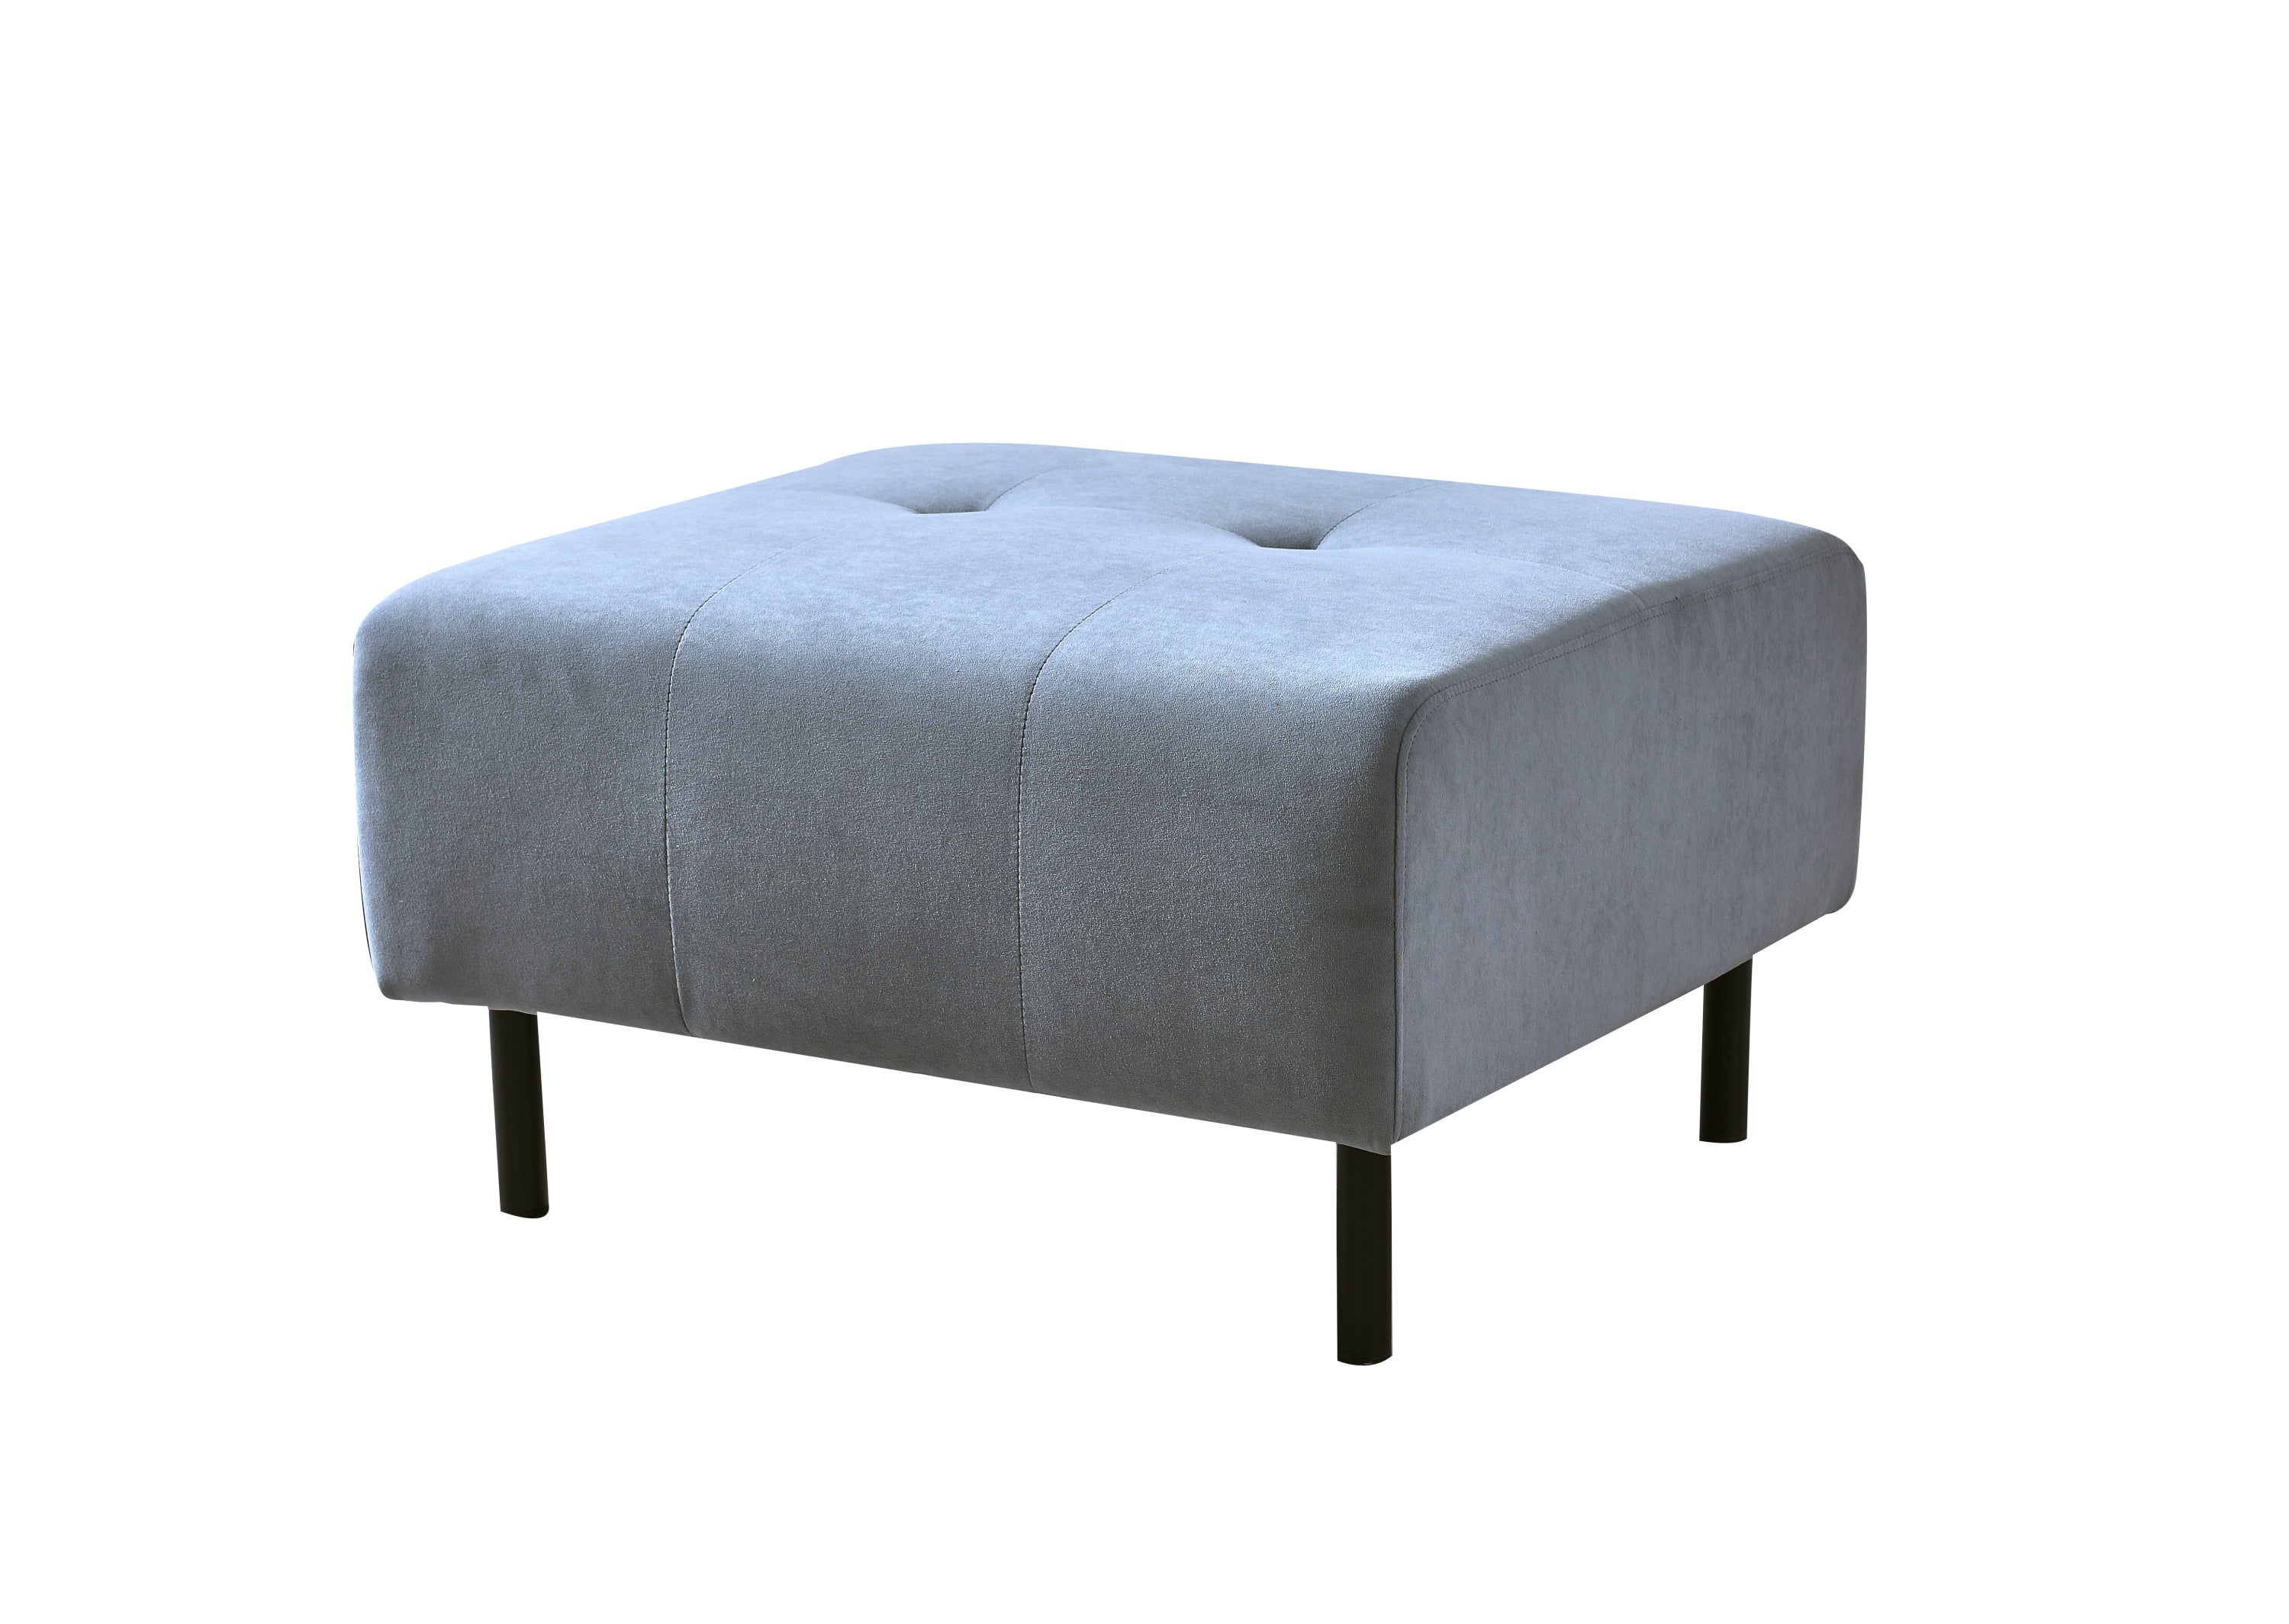 L-Shaped Modular Sofa with 3 Pillows (Light Gray)